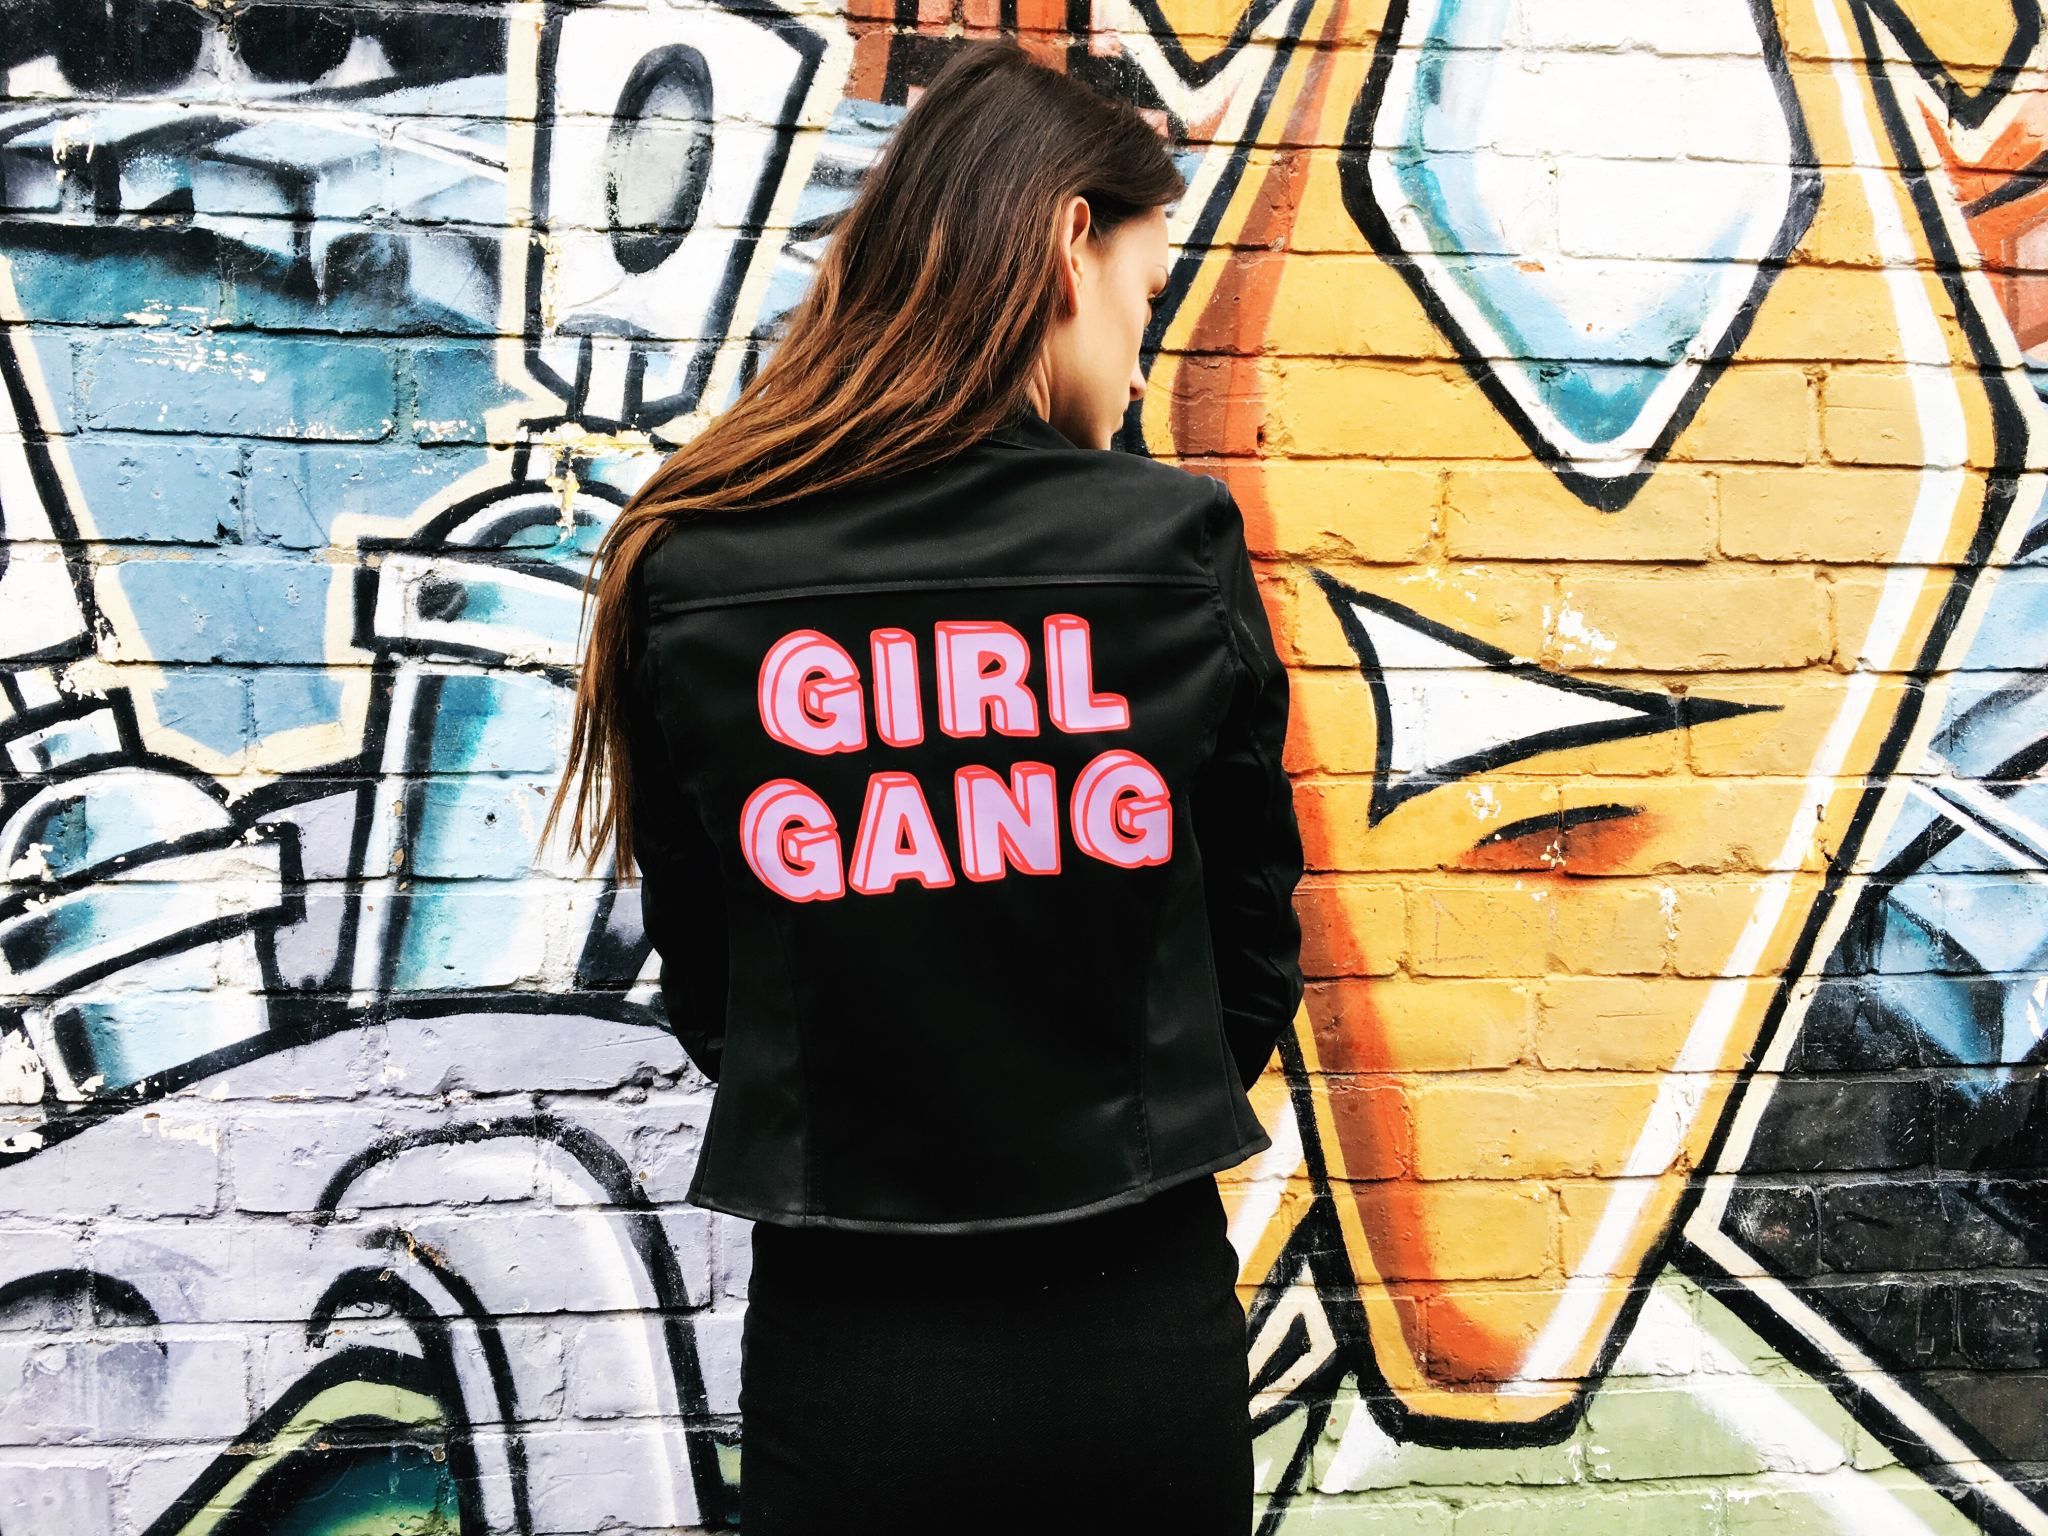 girl-gang-jacket-street-style-d4b65a02696b36894036d720be555620.jpg